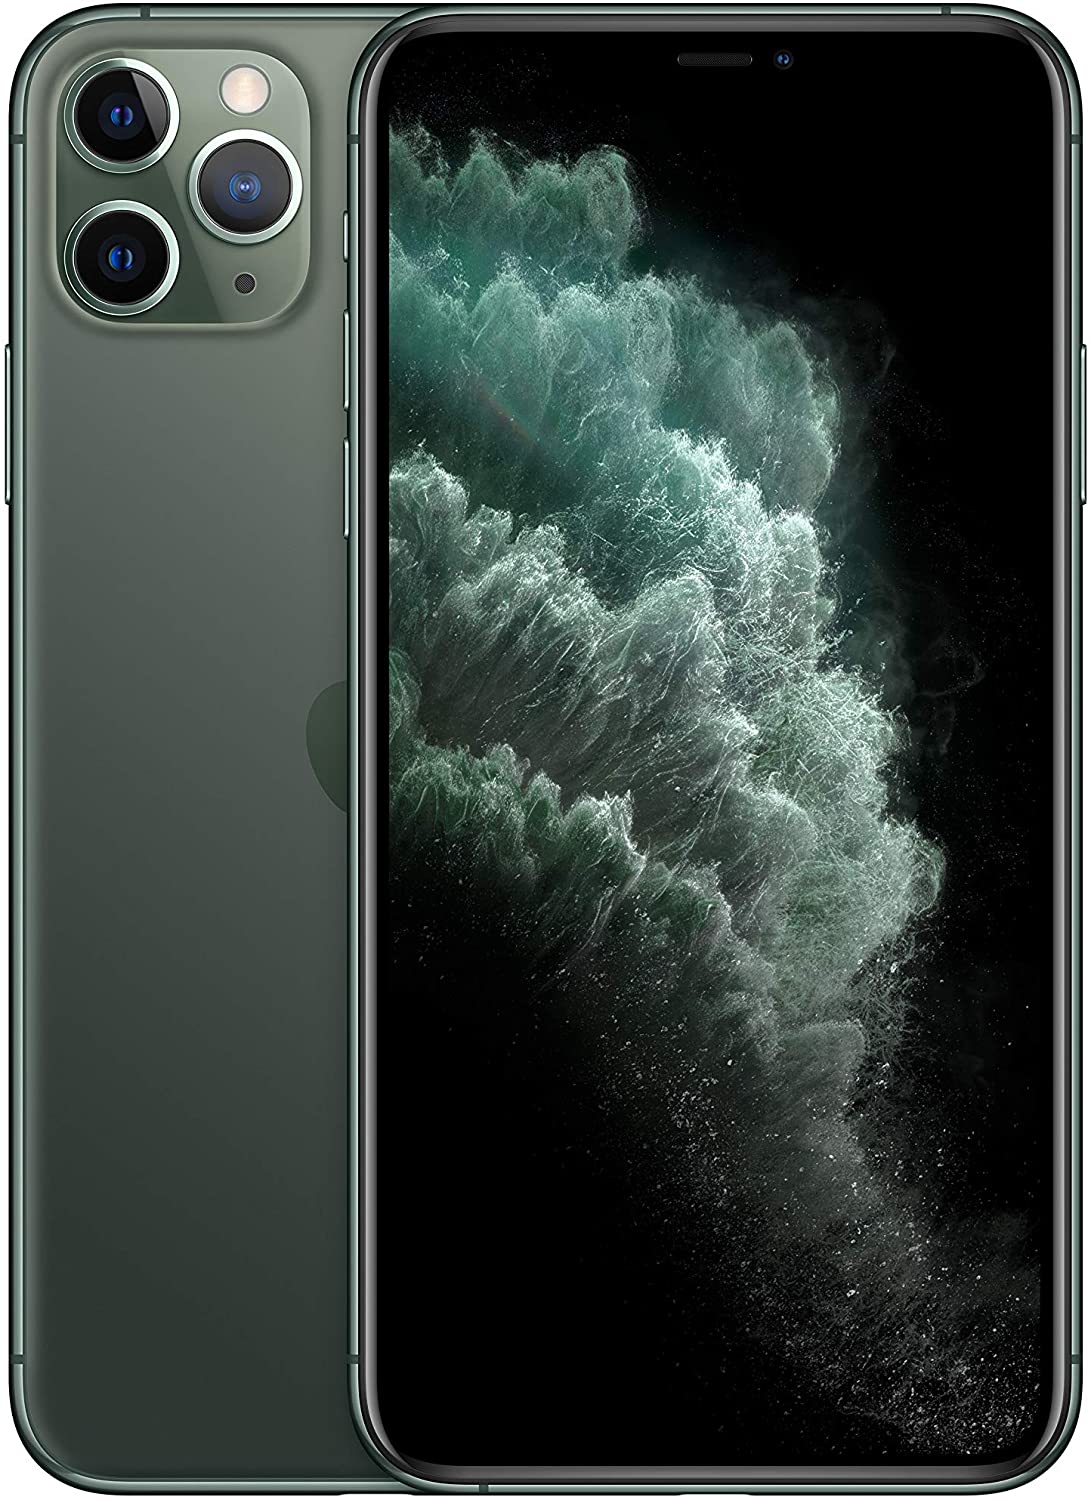 apple iphone 11 pro max, 64gb, night green - a photo